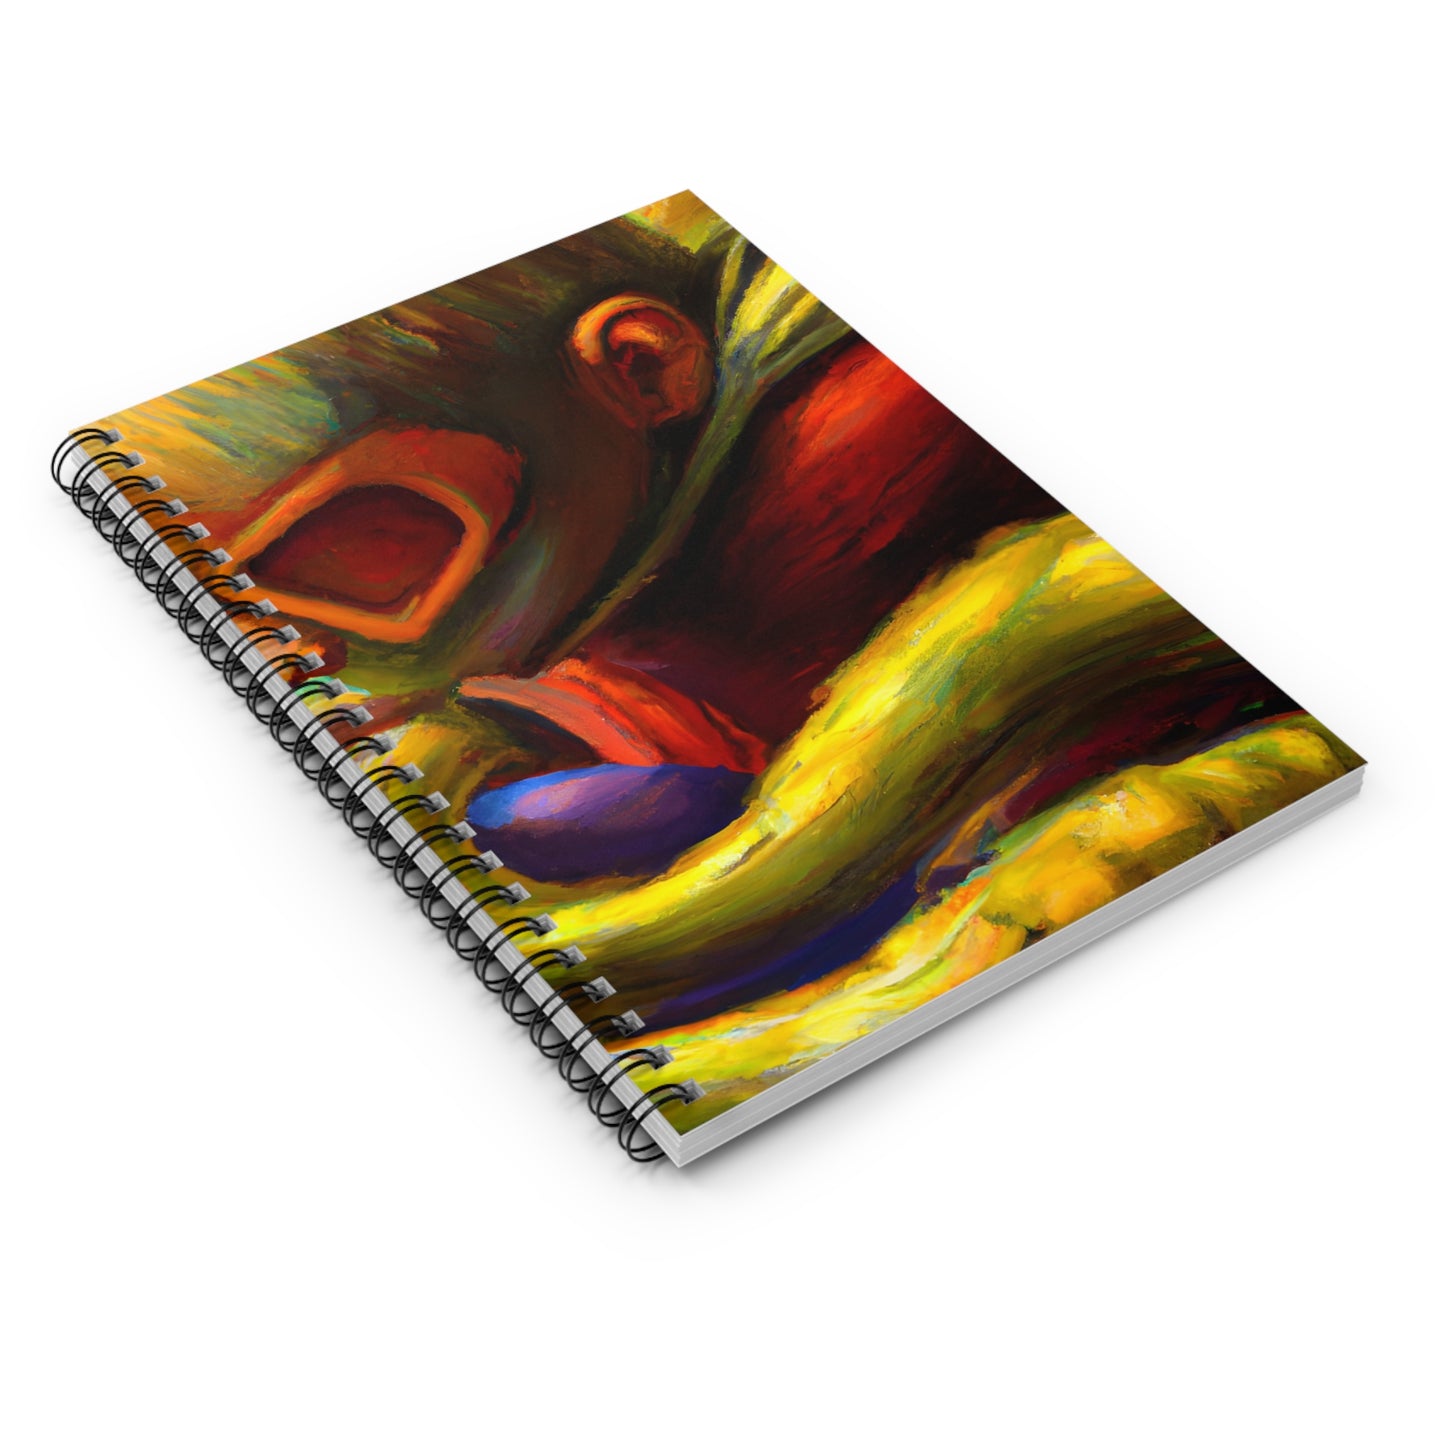 Smokephin Notebook Journal